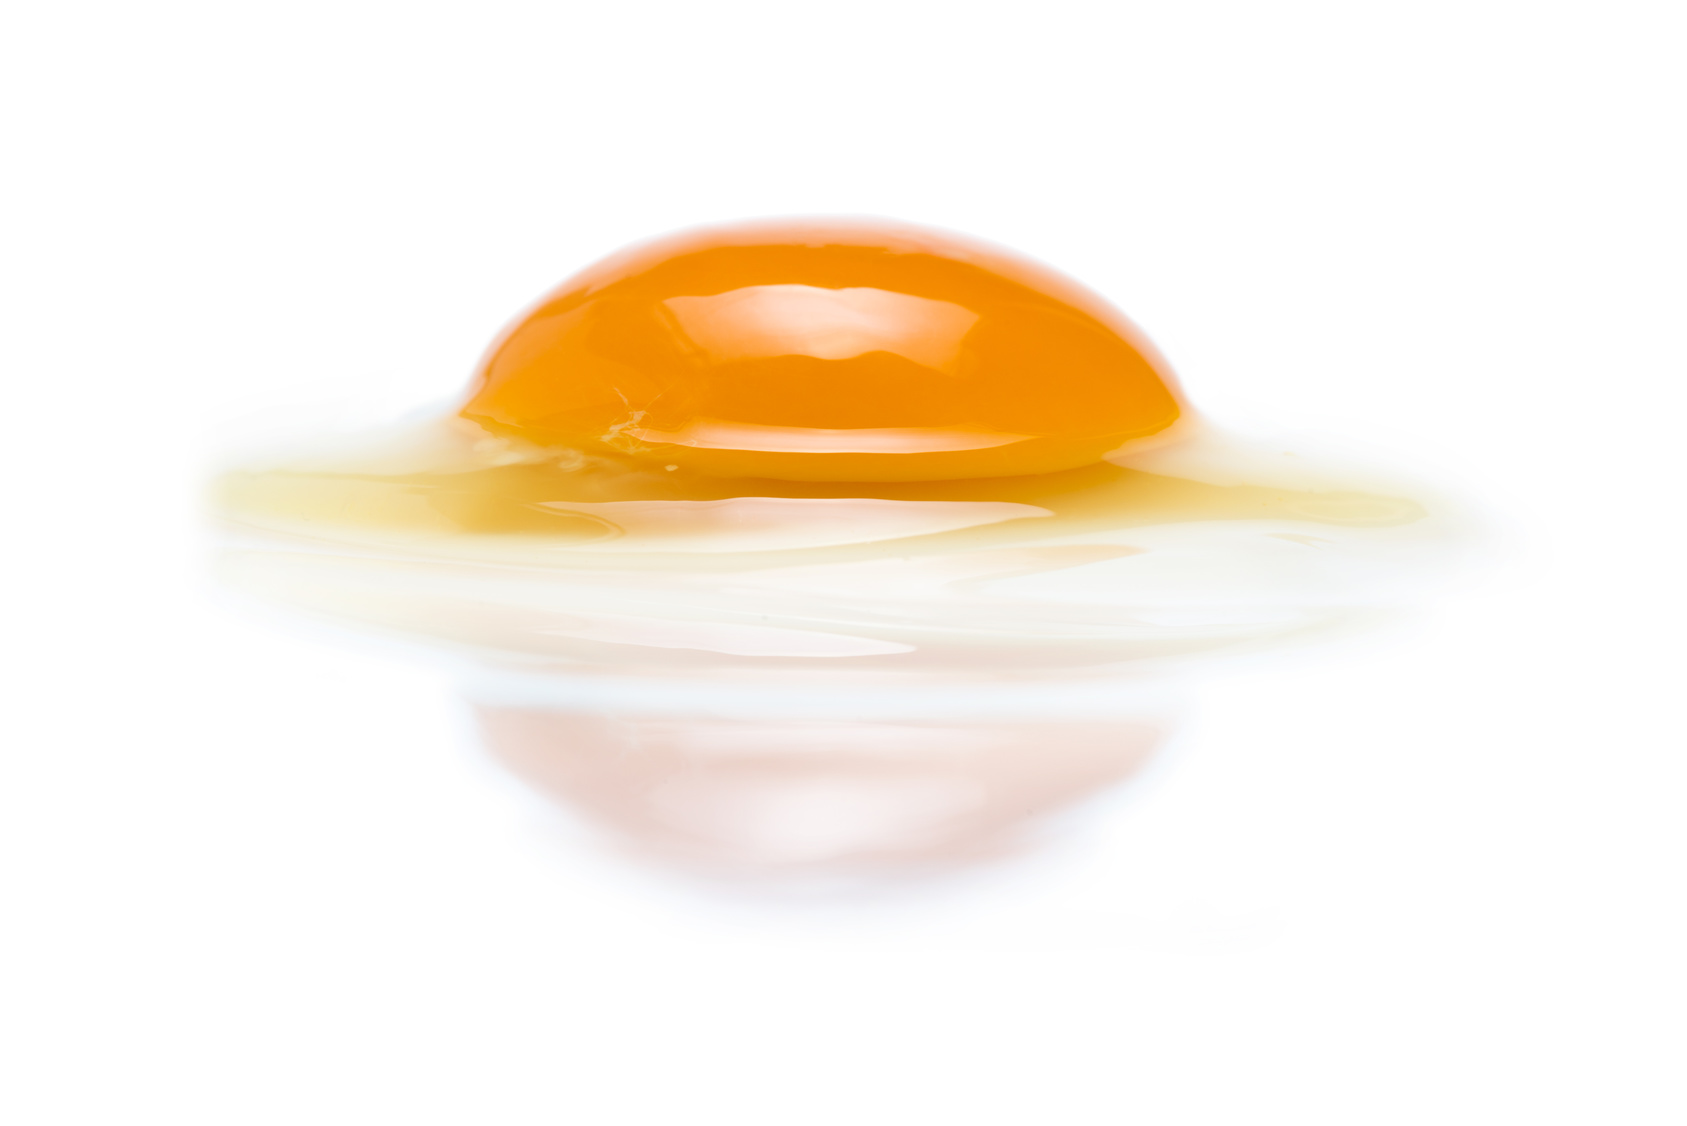 raw egg with a whole yolk